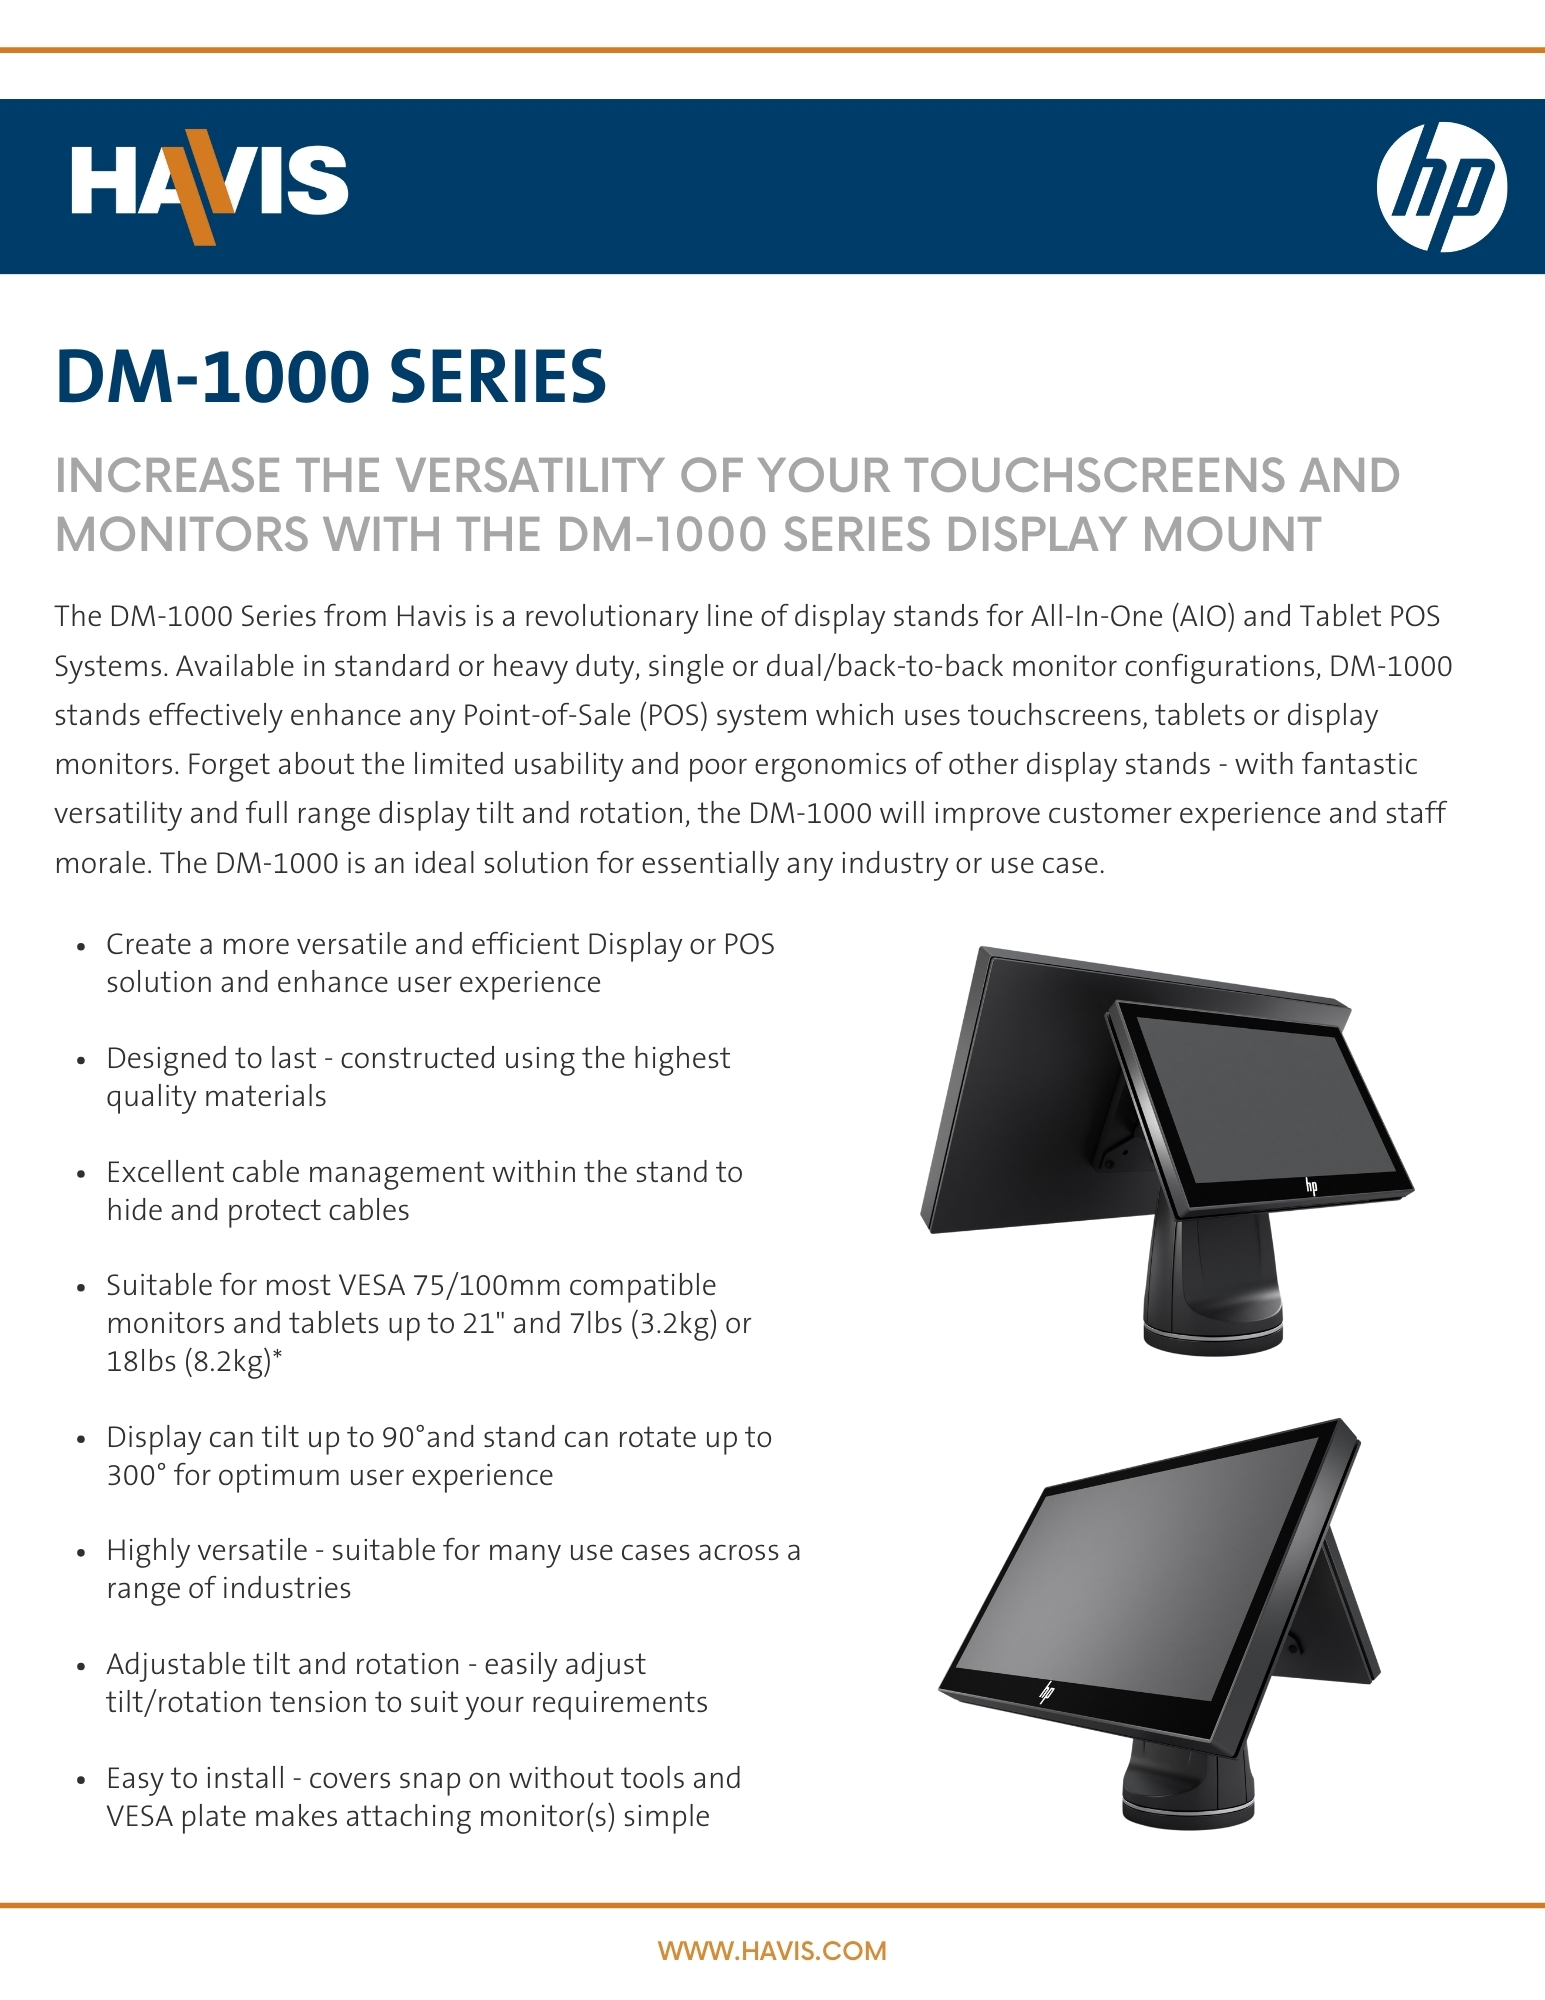 DM-1000 - Data Sheet (HP)